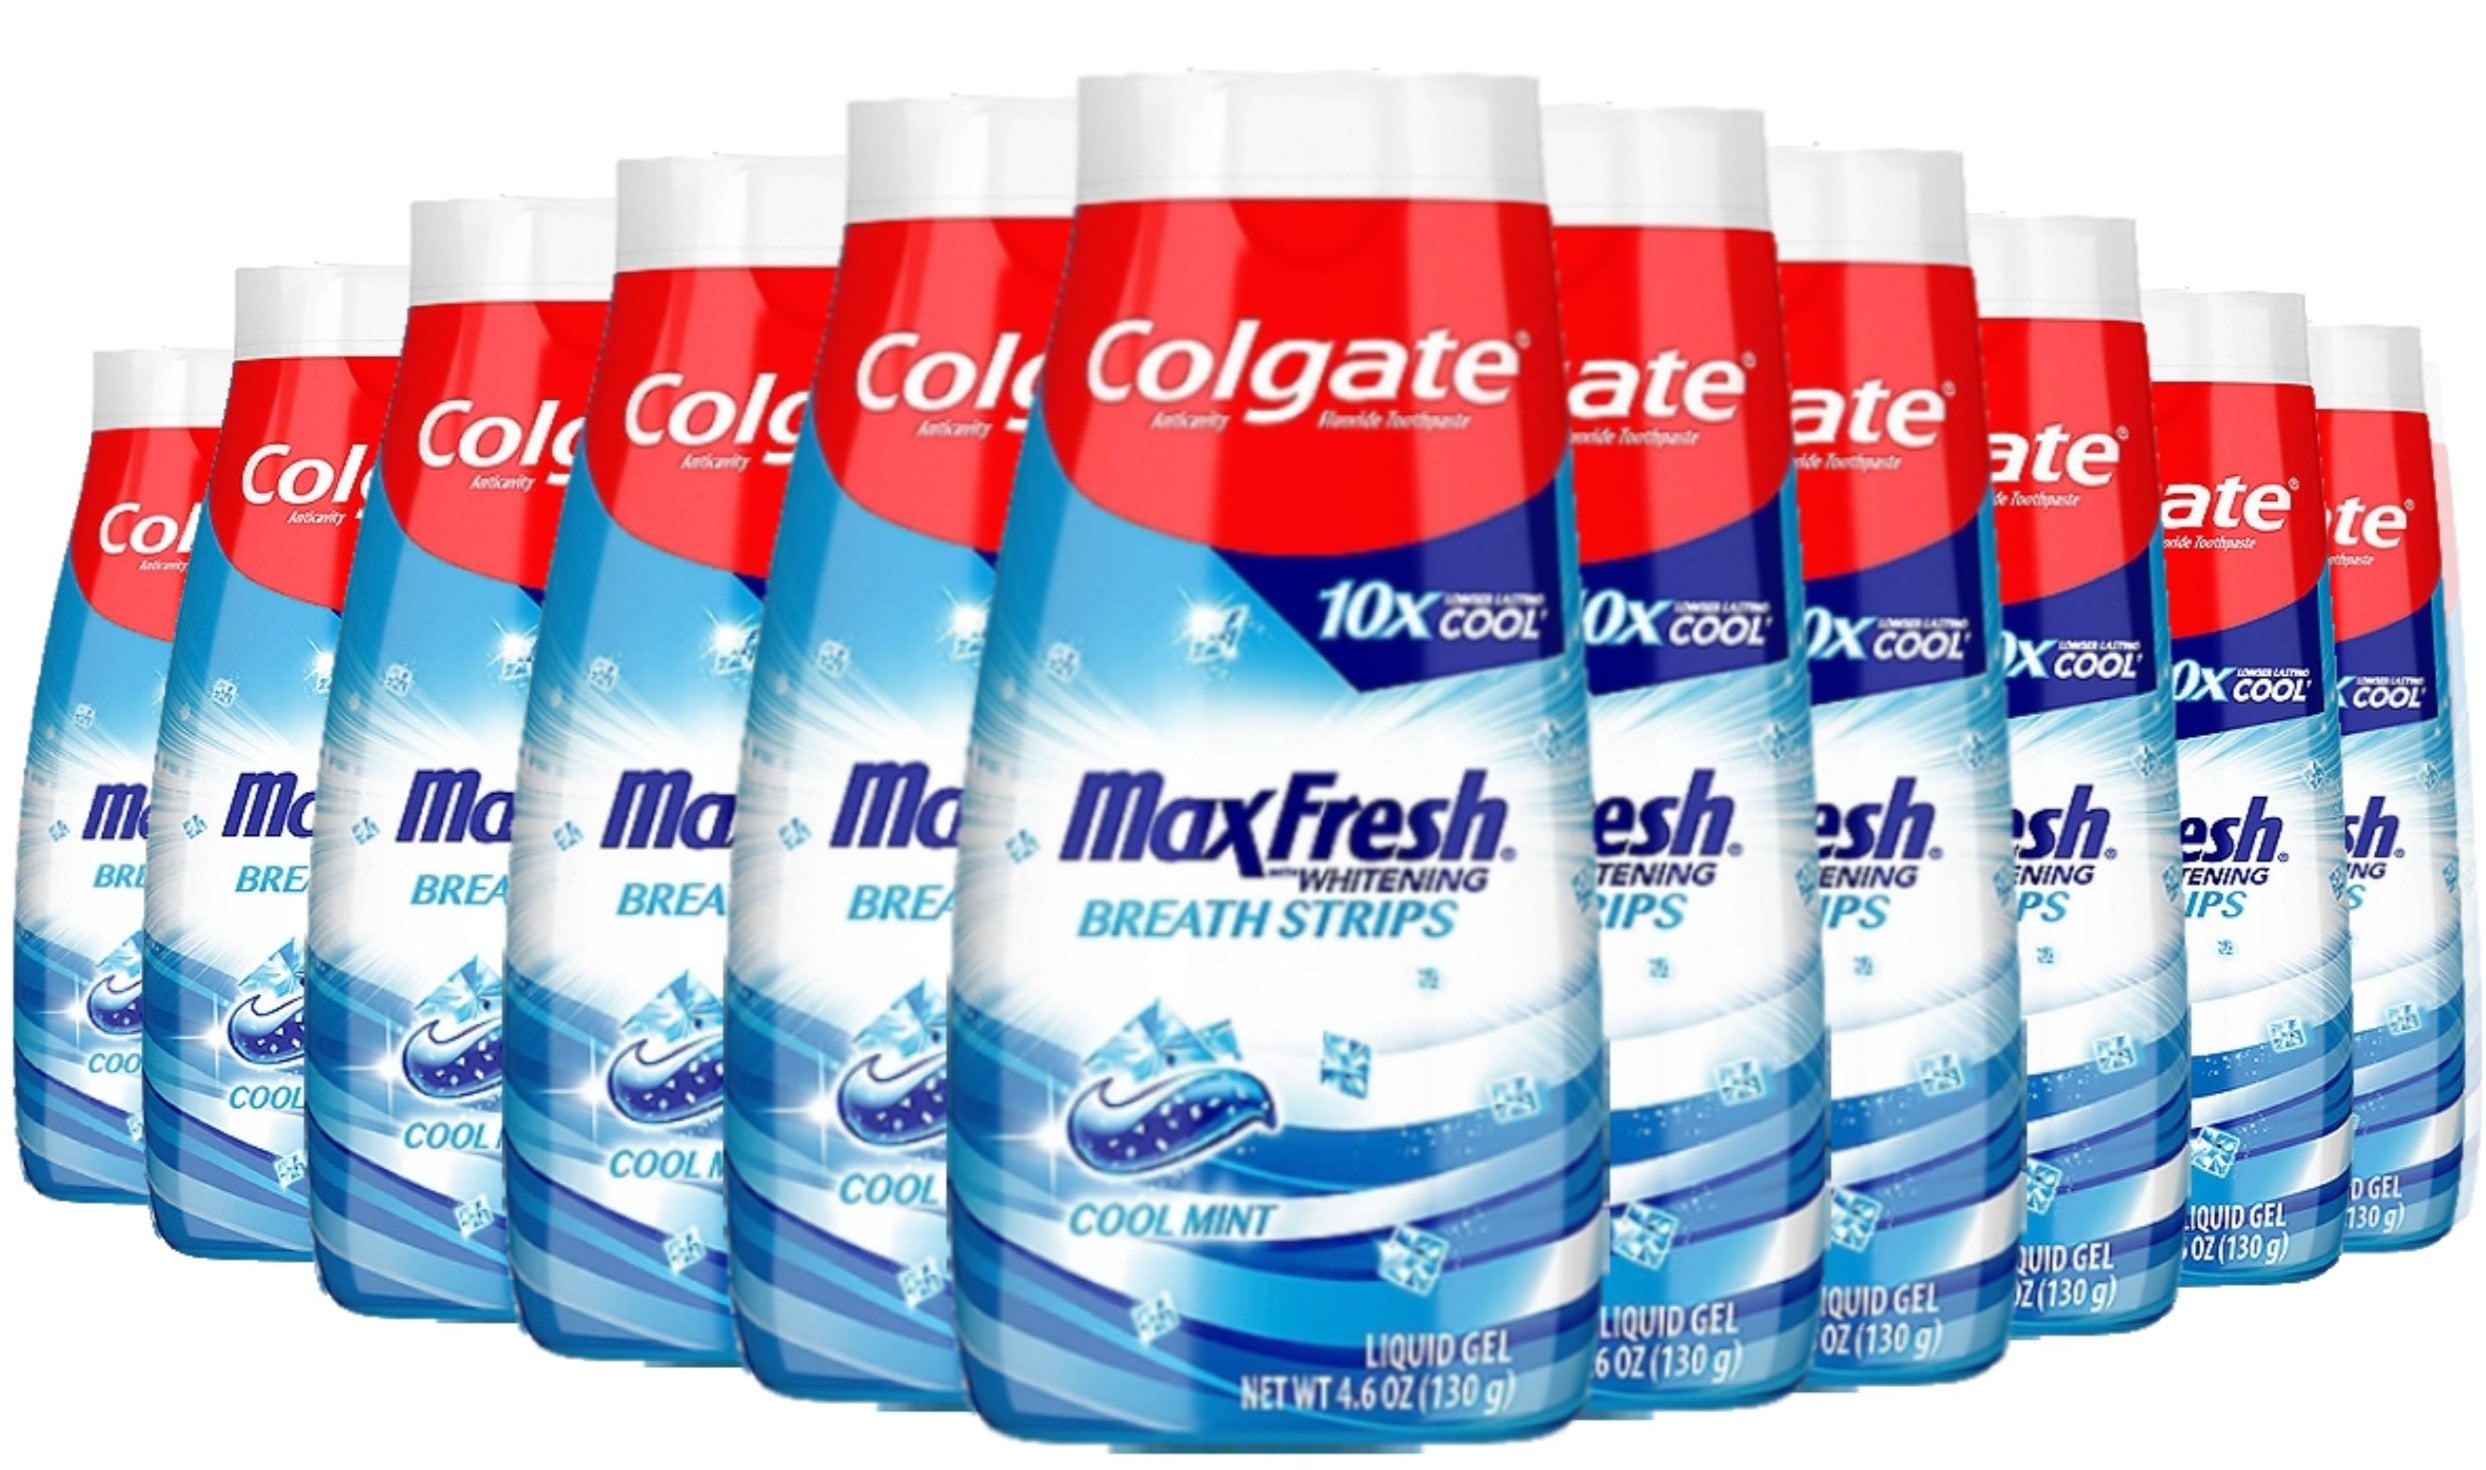 Colgate Max Fresh Liquid Toothpaste W/ Mini Breath Strips, Cool Mint 4.6 oz - 12 pack